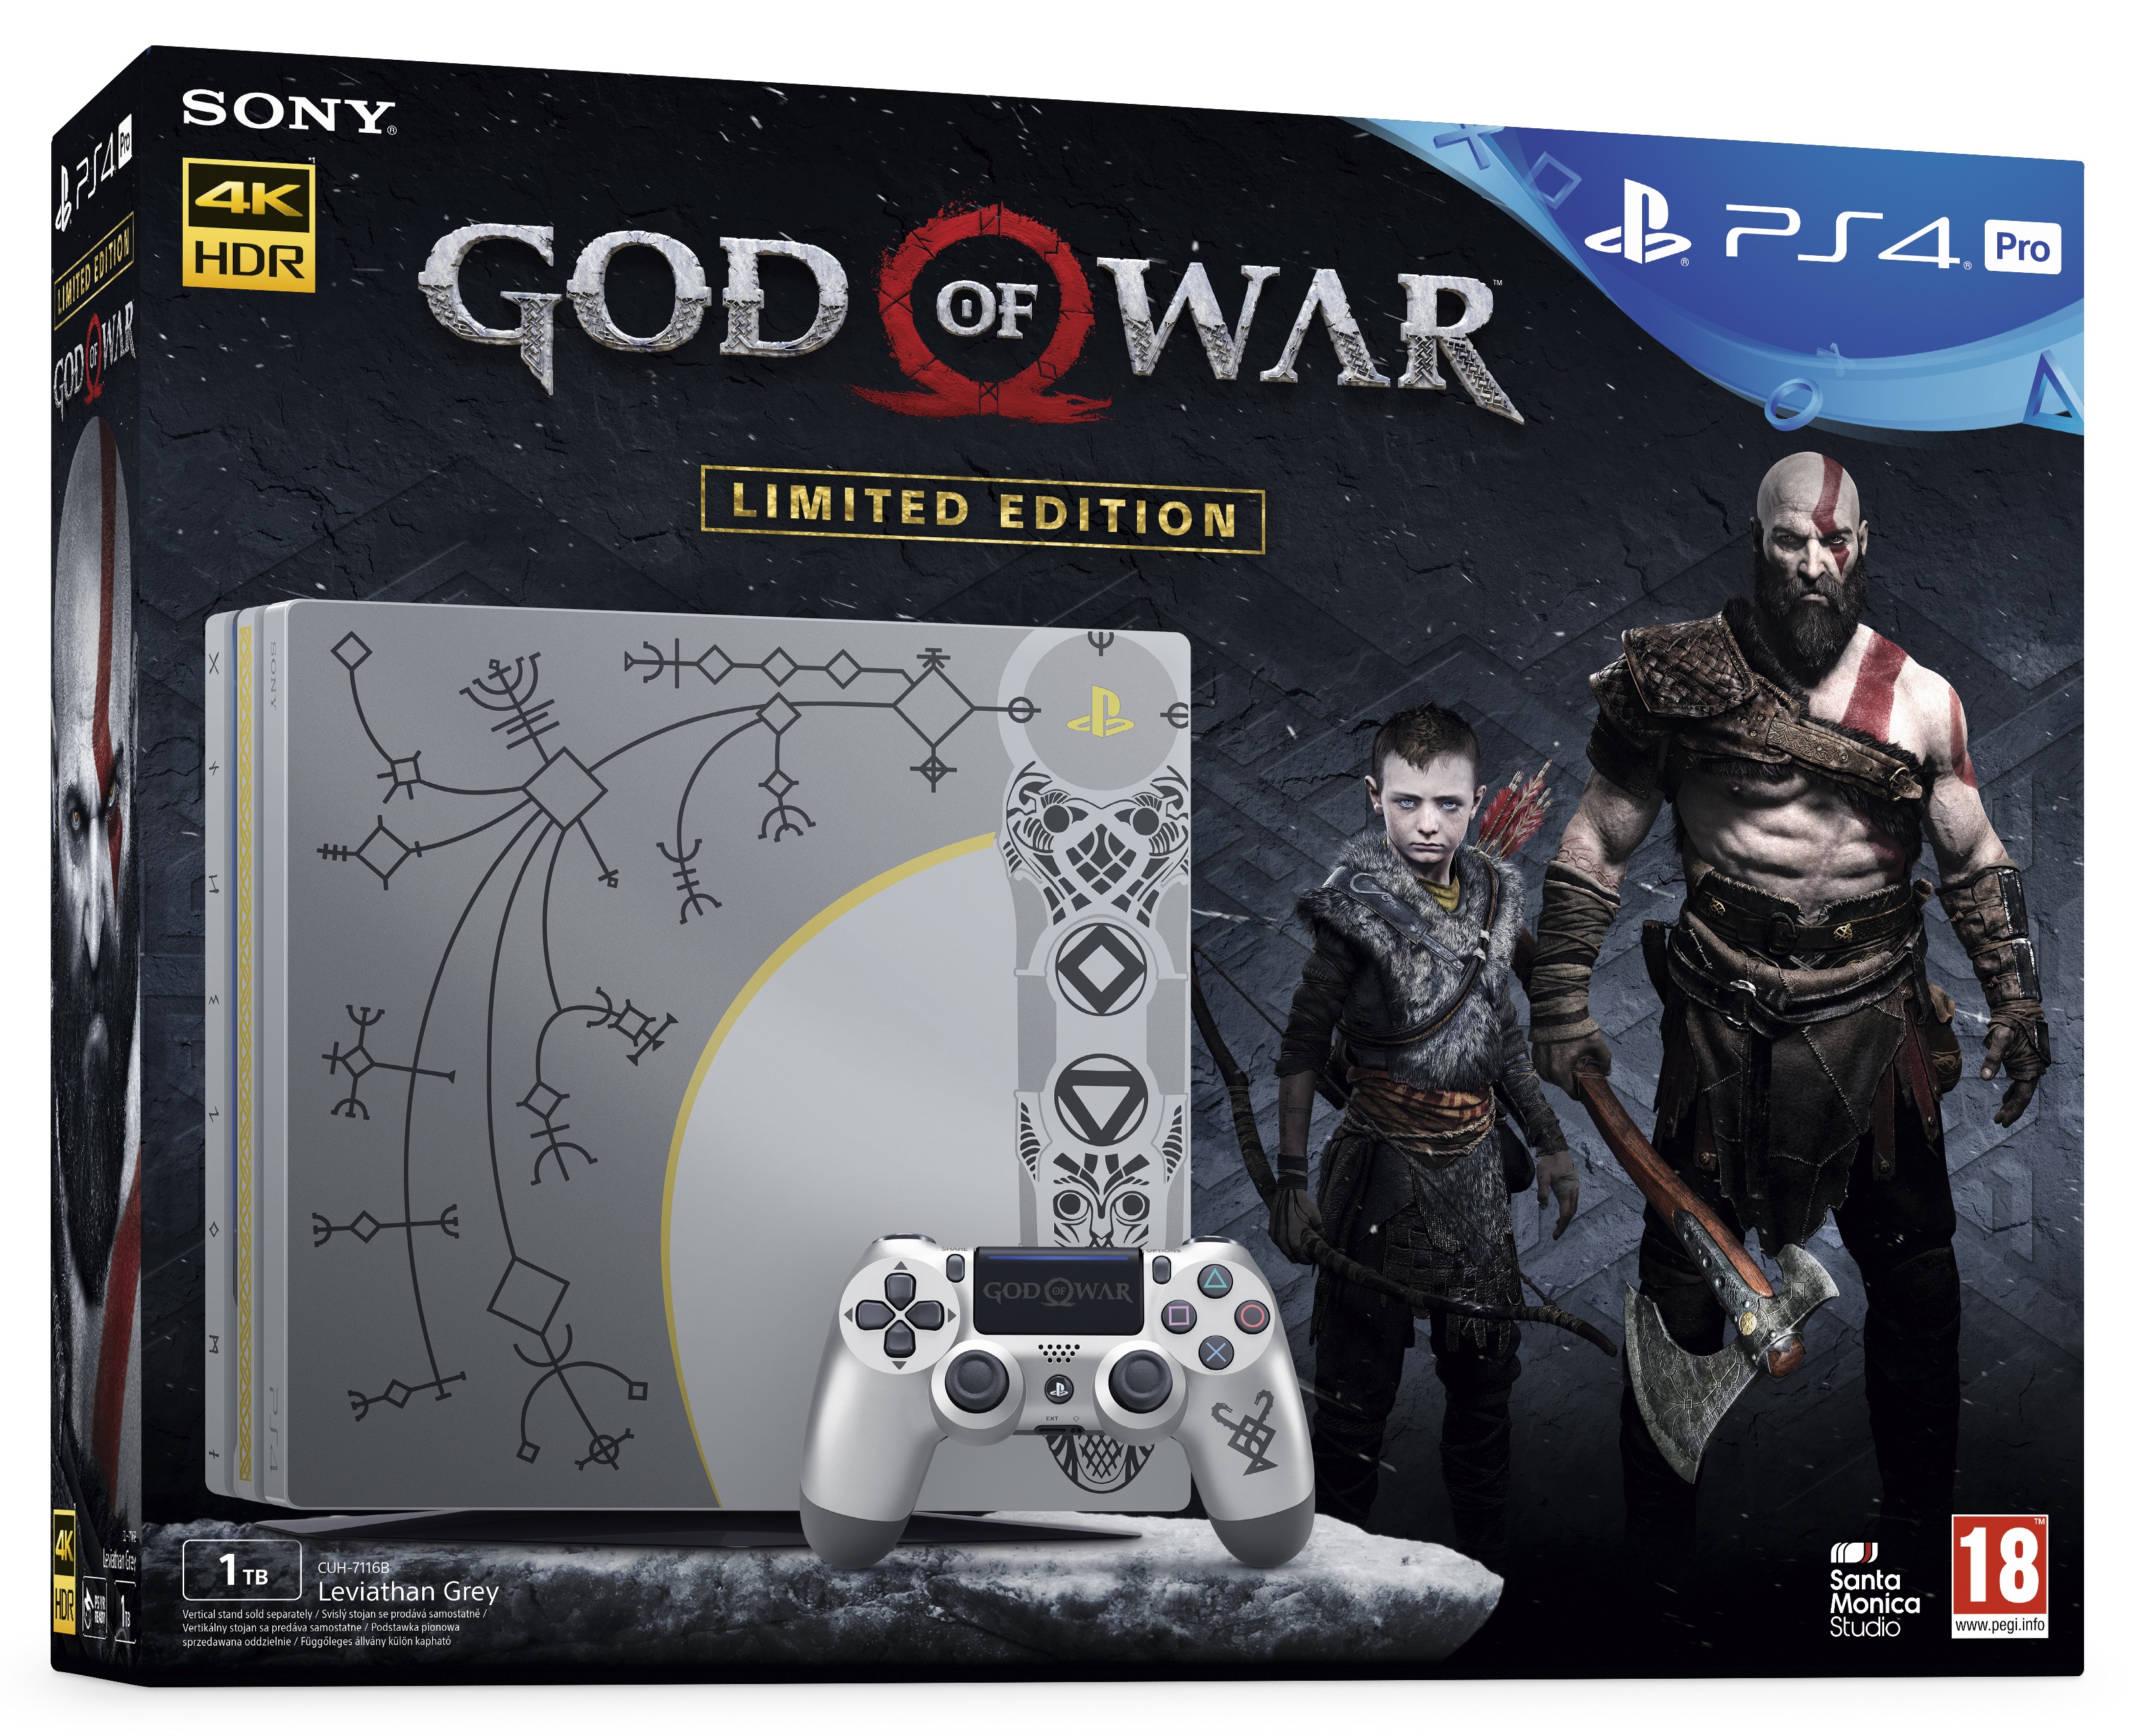 Sony Playstation 4 Pro 1TB God of War Limited Edition